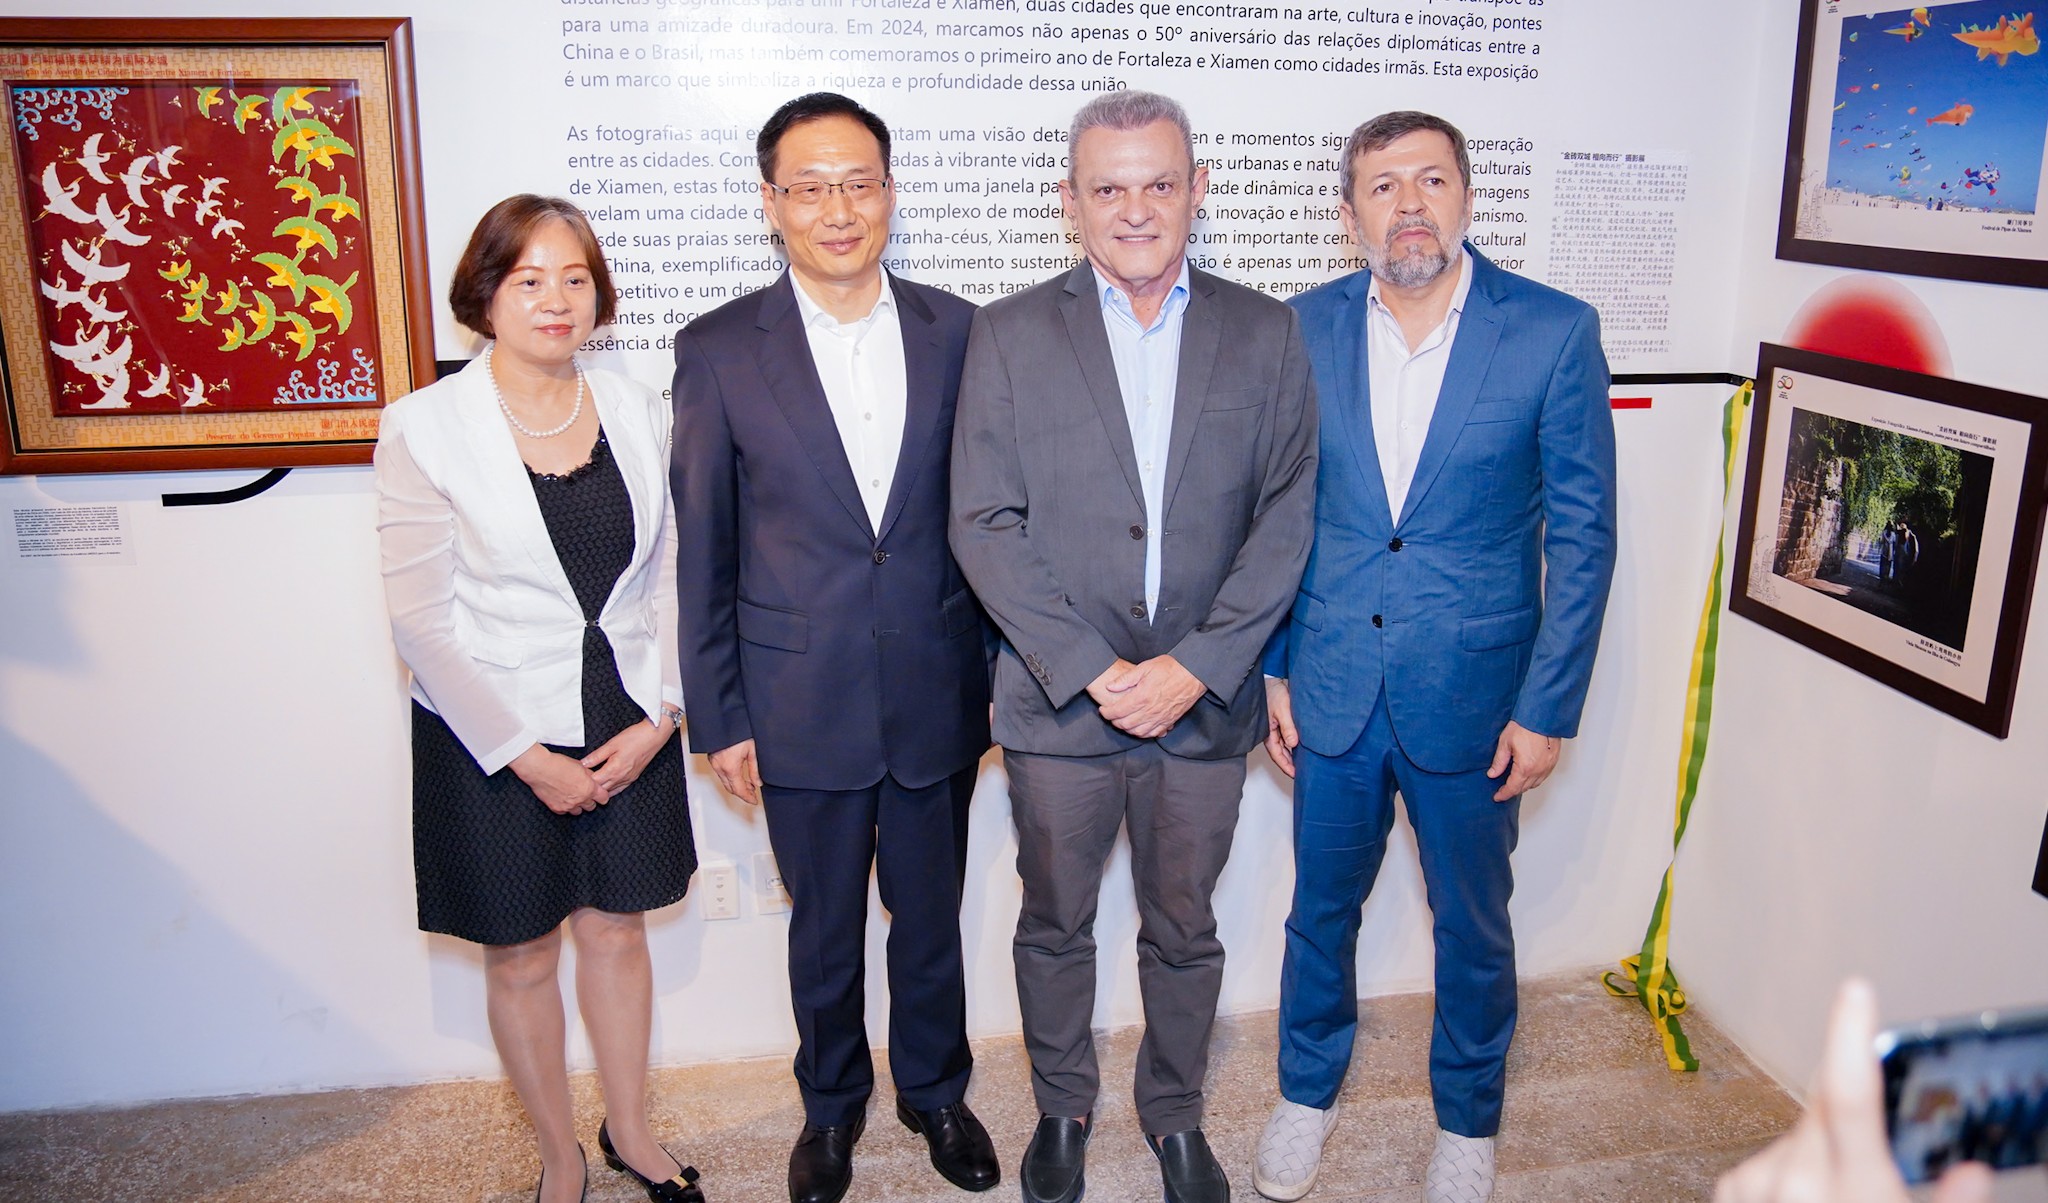 Sarto participa de abertura da exposição que celebra diplomacia entre Fortaleza e Xiamen